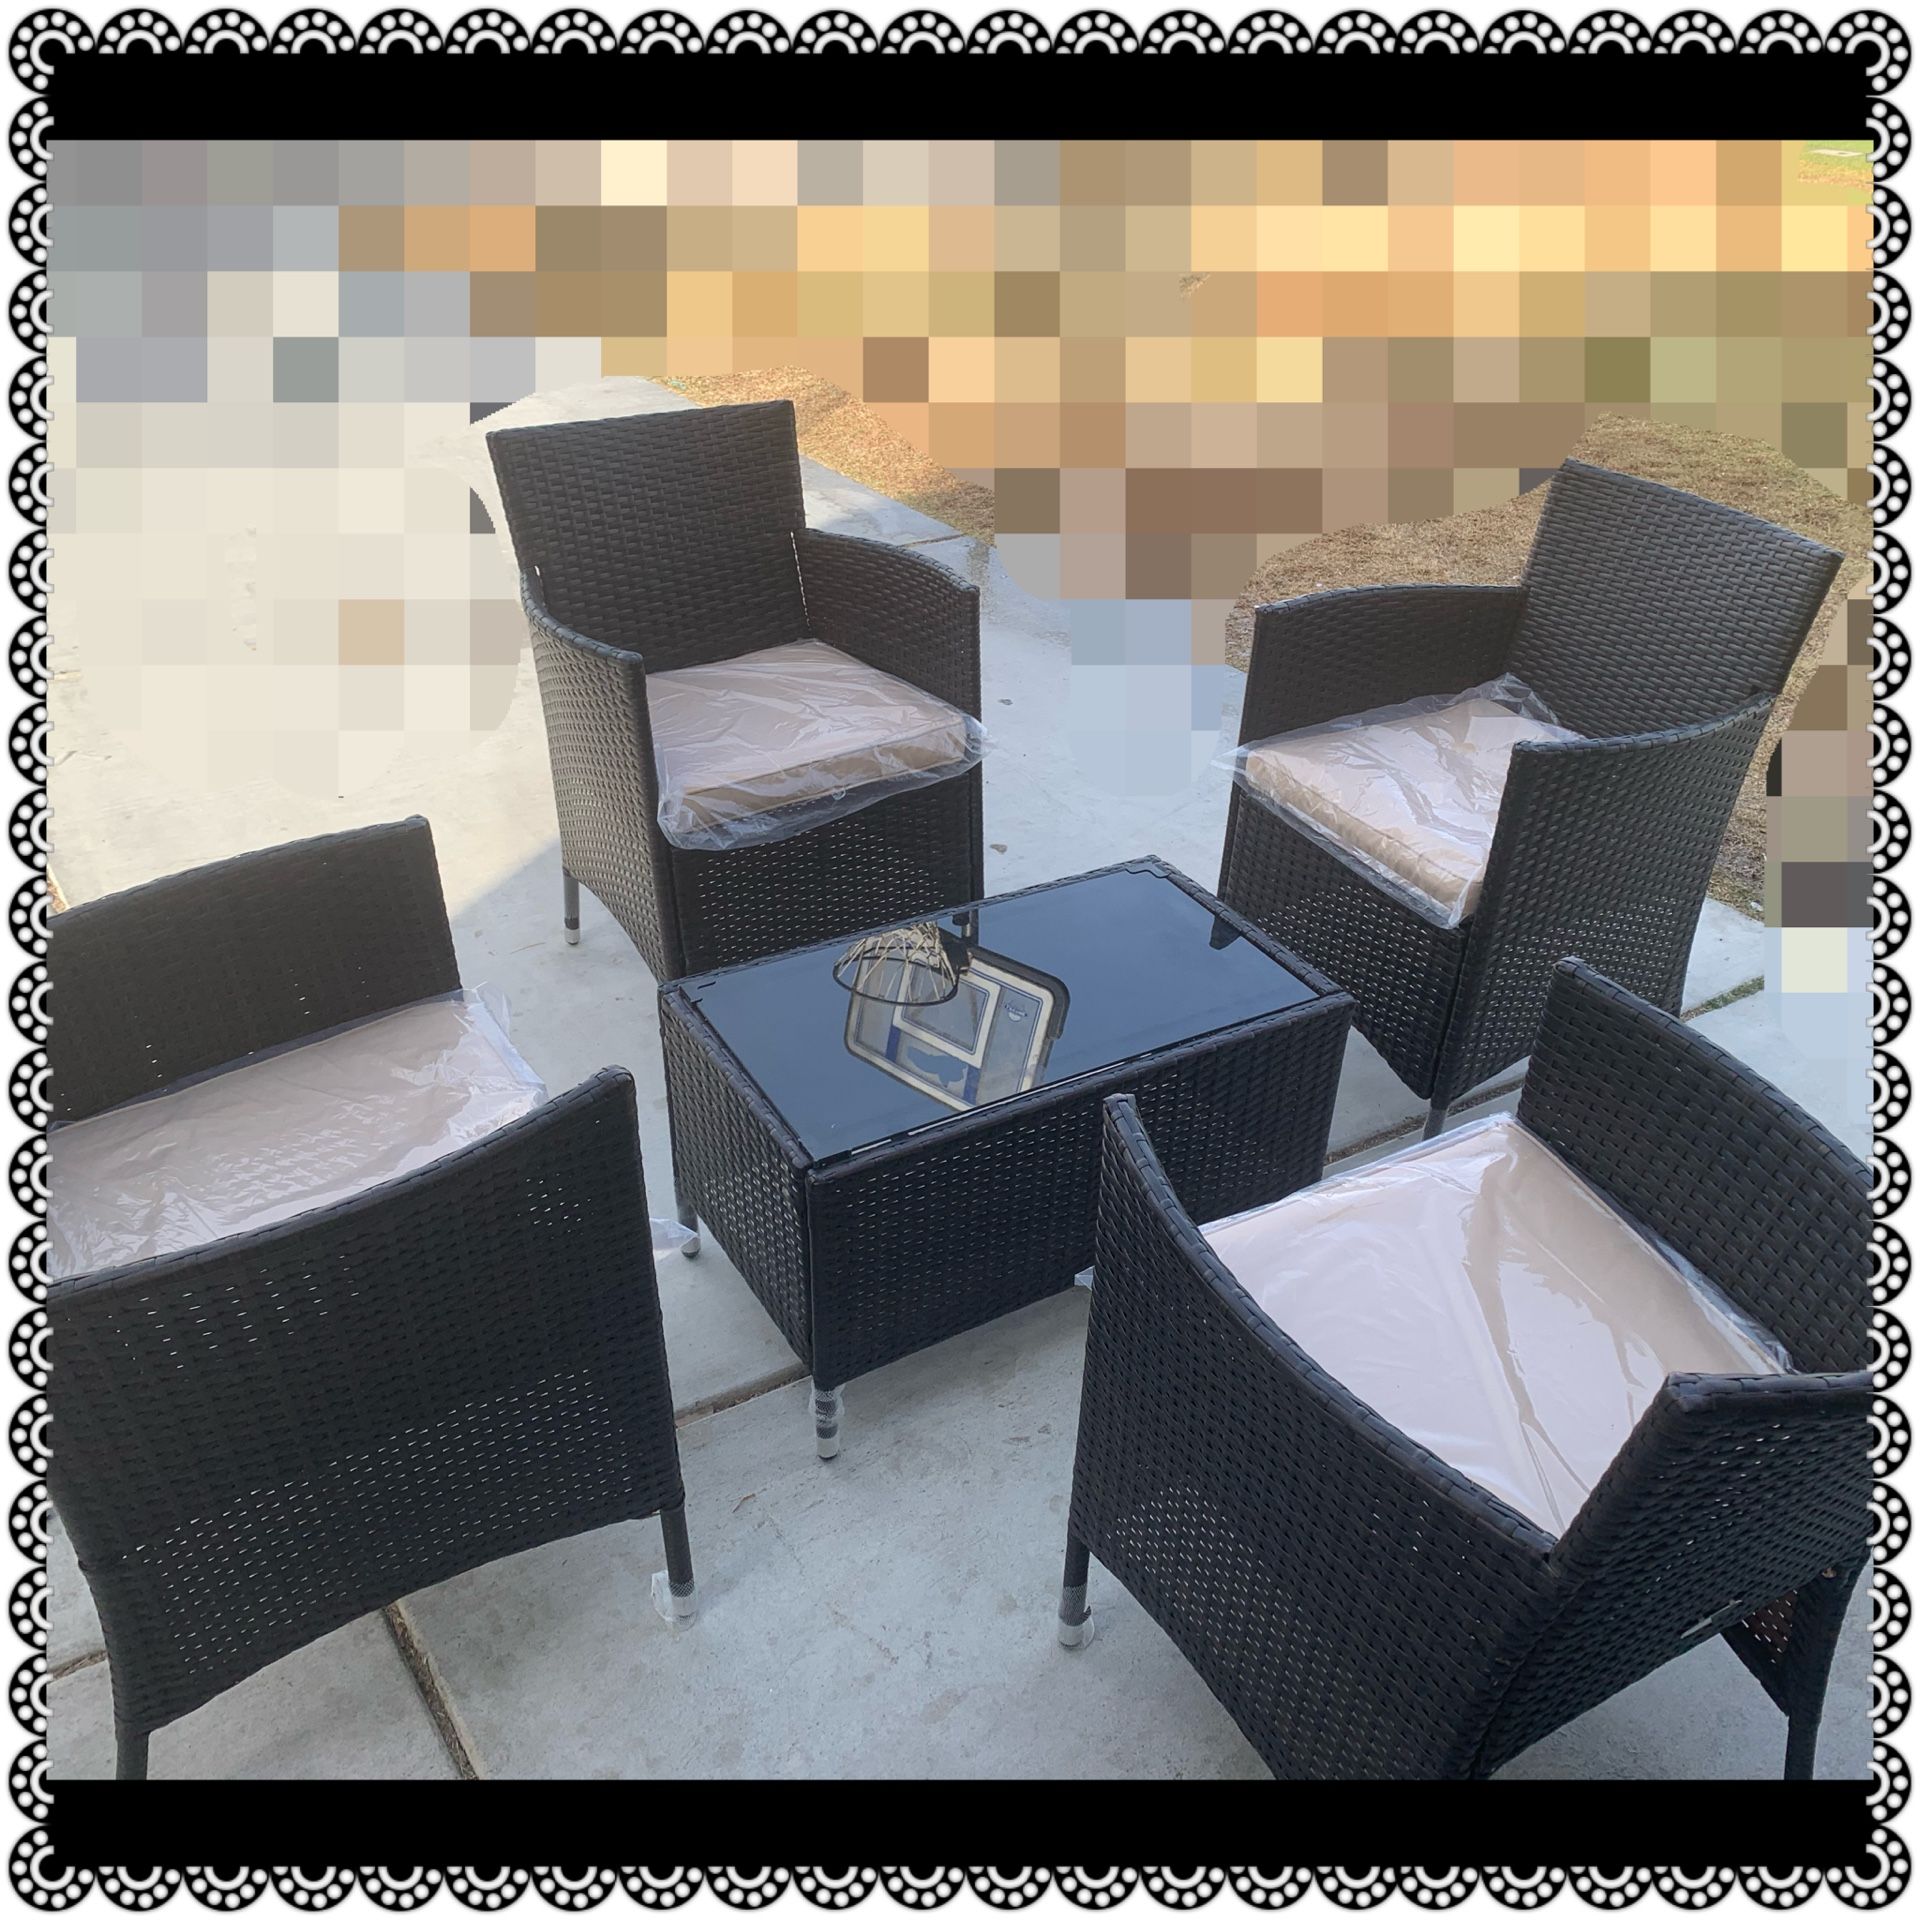 5 pcs patio furniture $590 obo